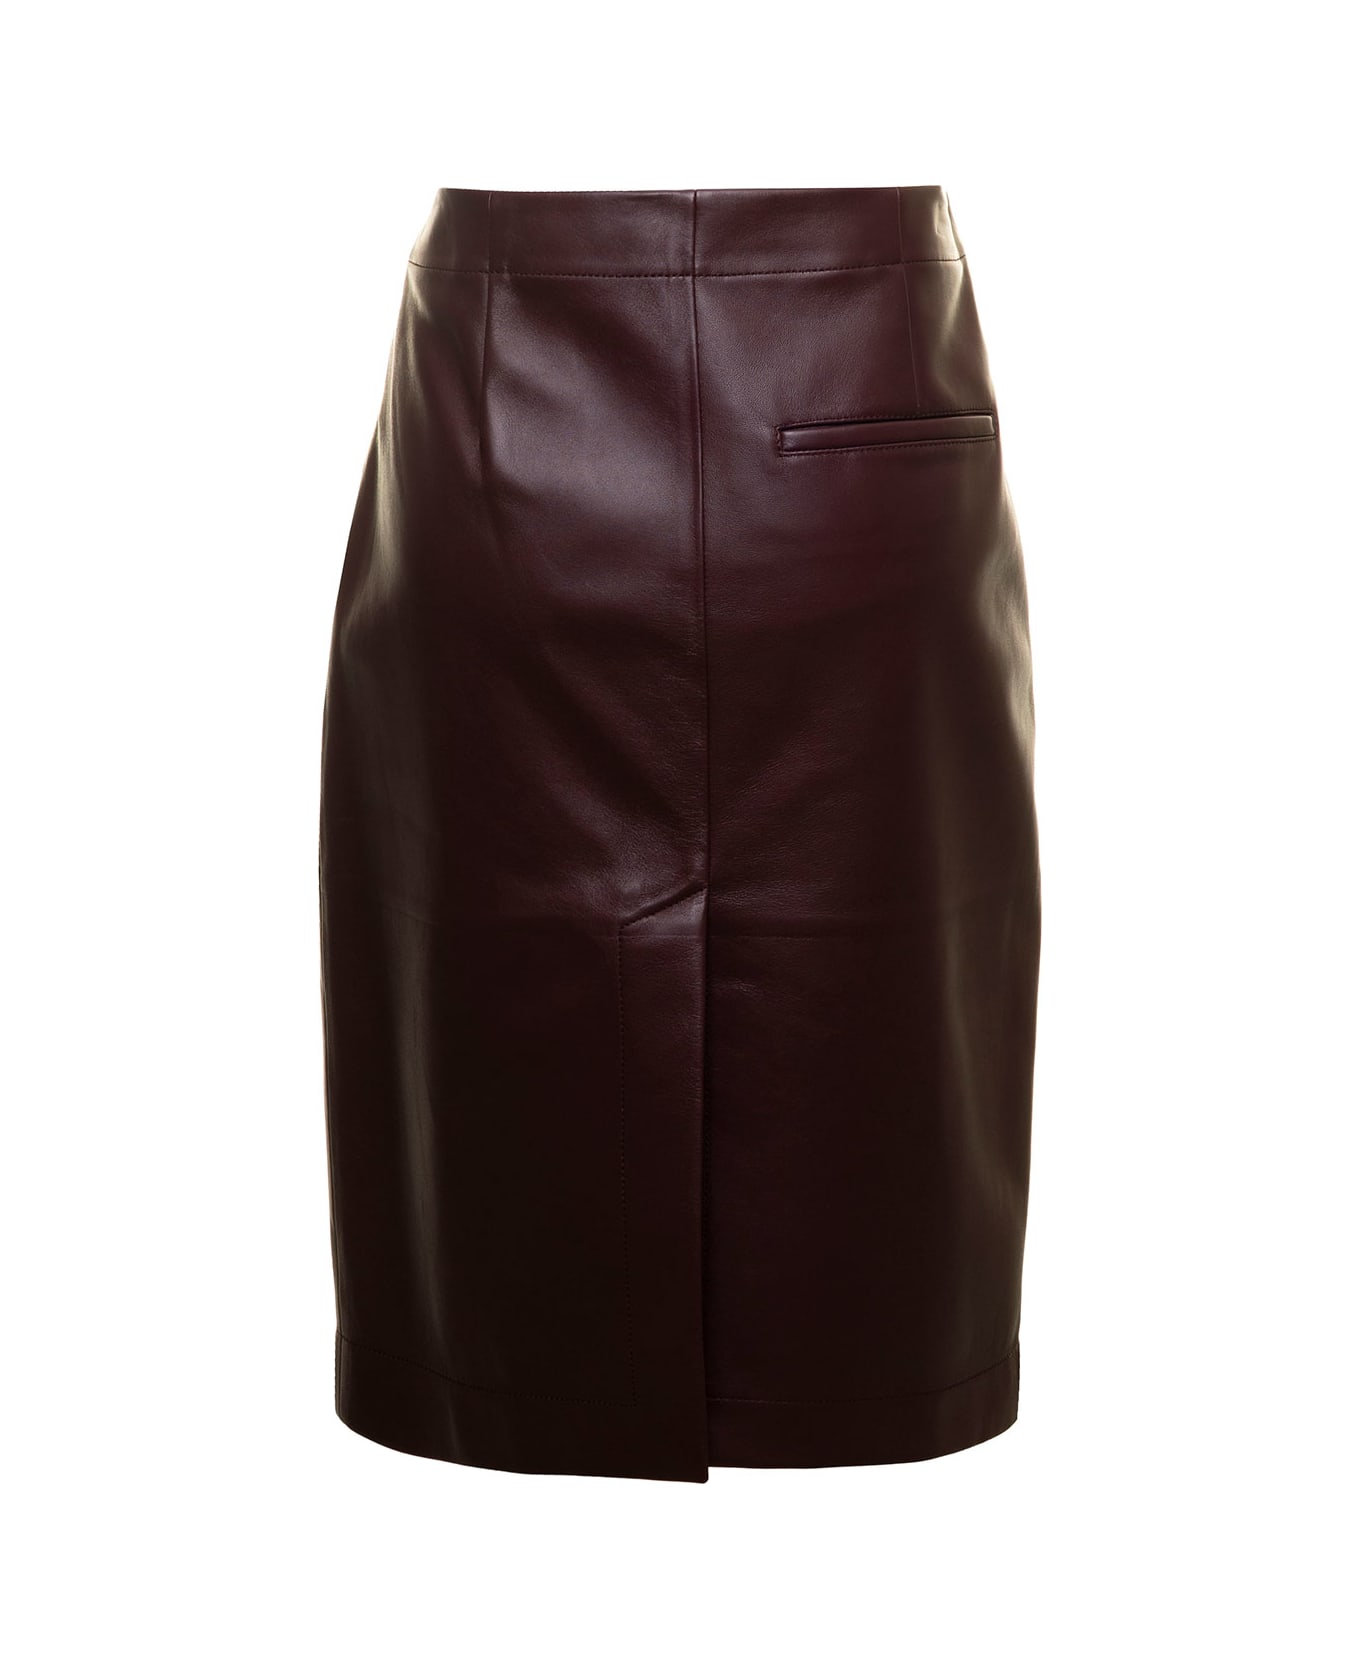 Bottega Veneta Pencil Leather Skirt - Bordeaux